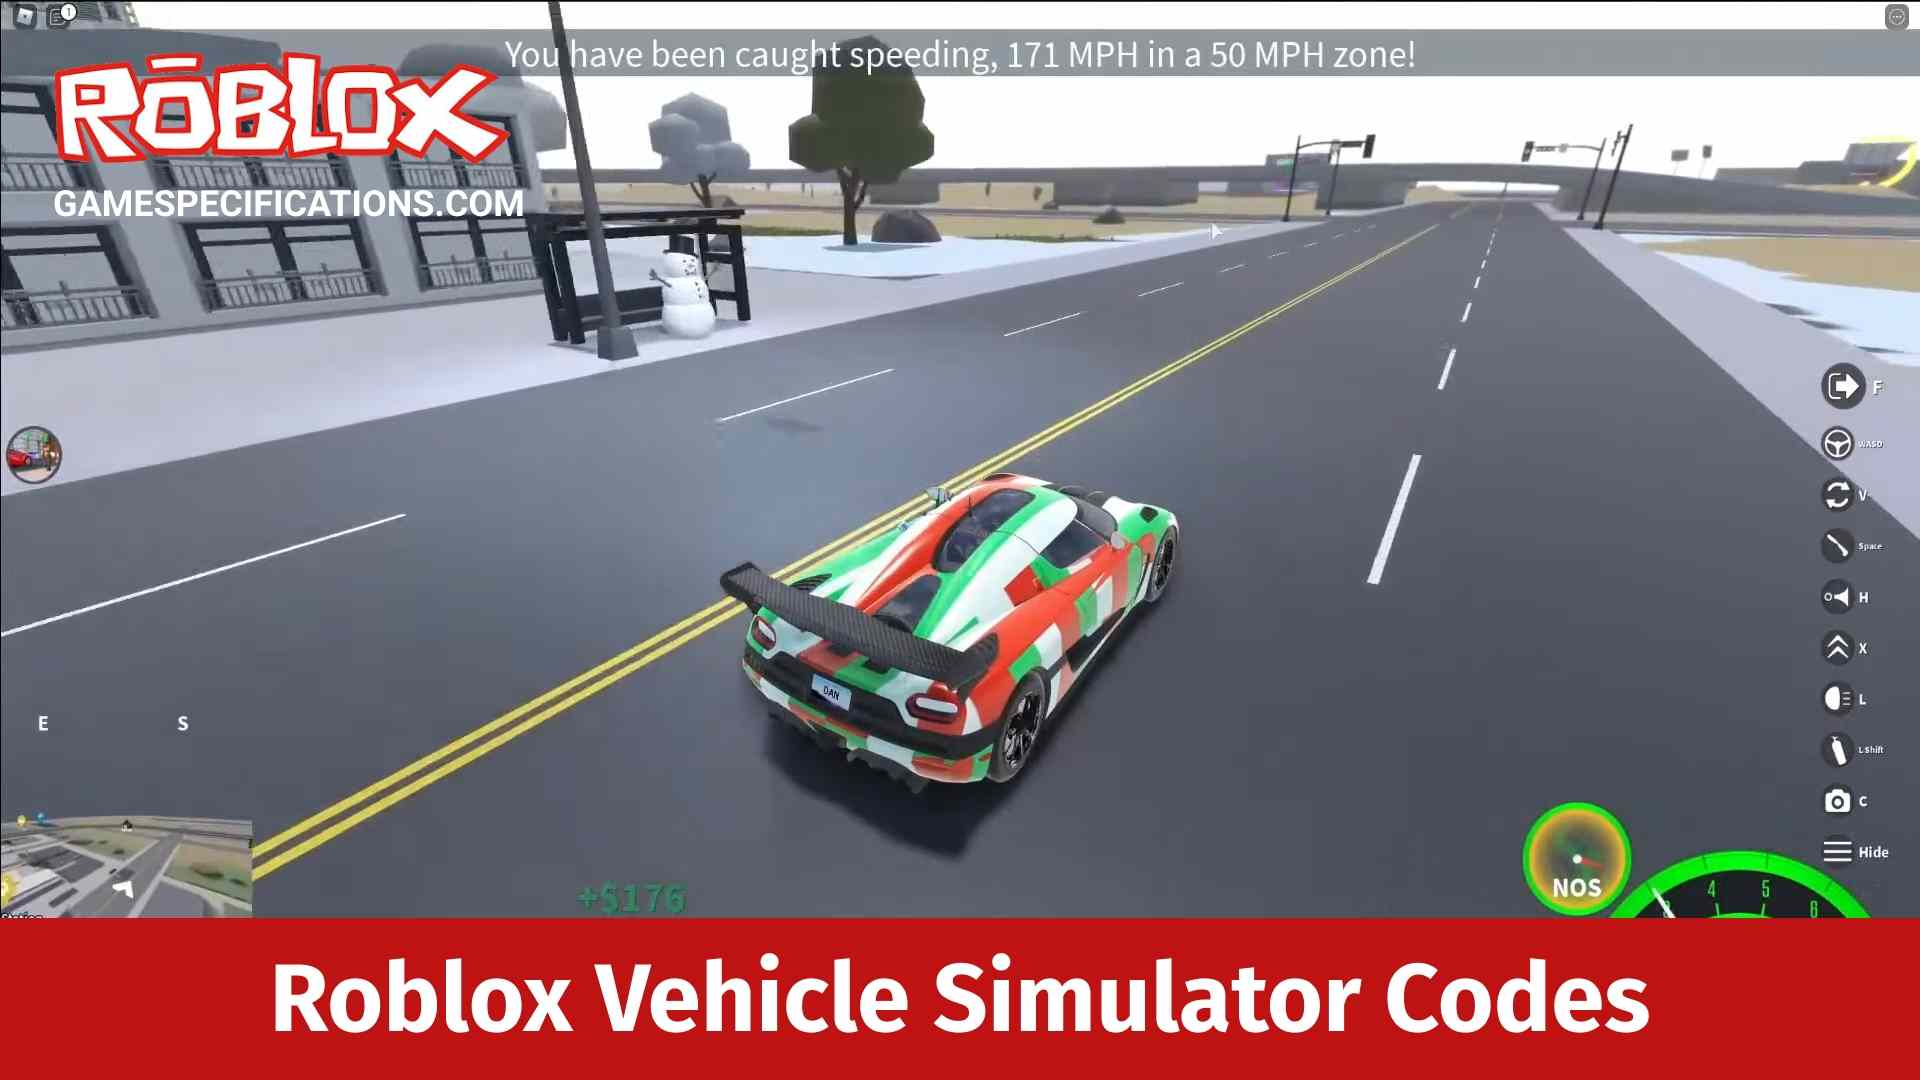 Roblox Vehicle Simulator Codes July 2021 Game Specifications - codes for vehicle simulator in roblox